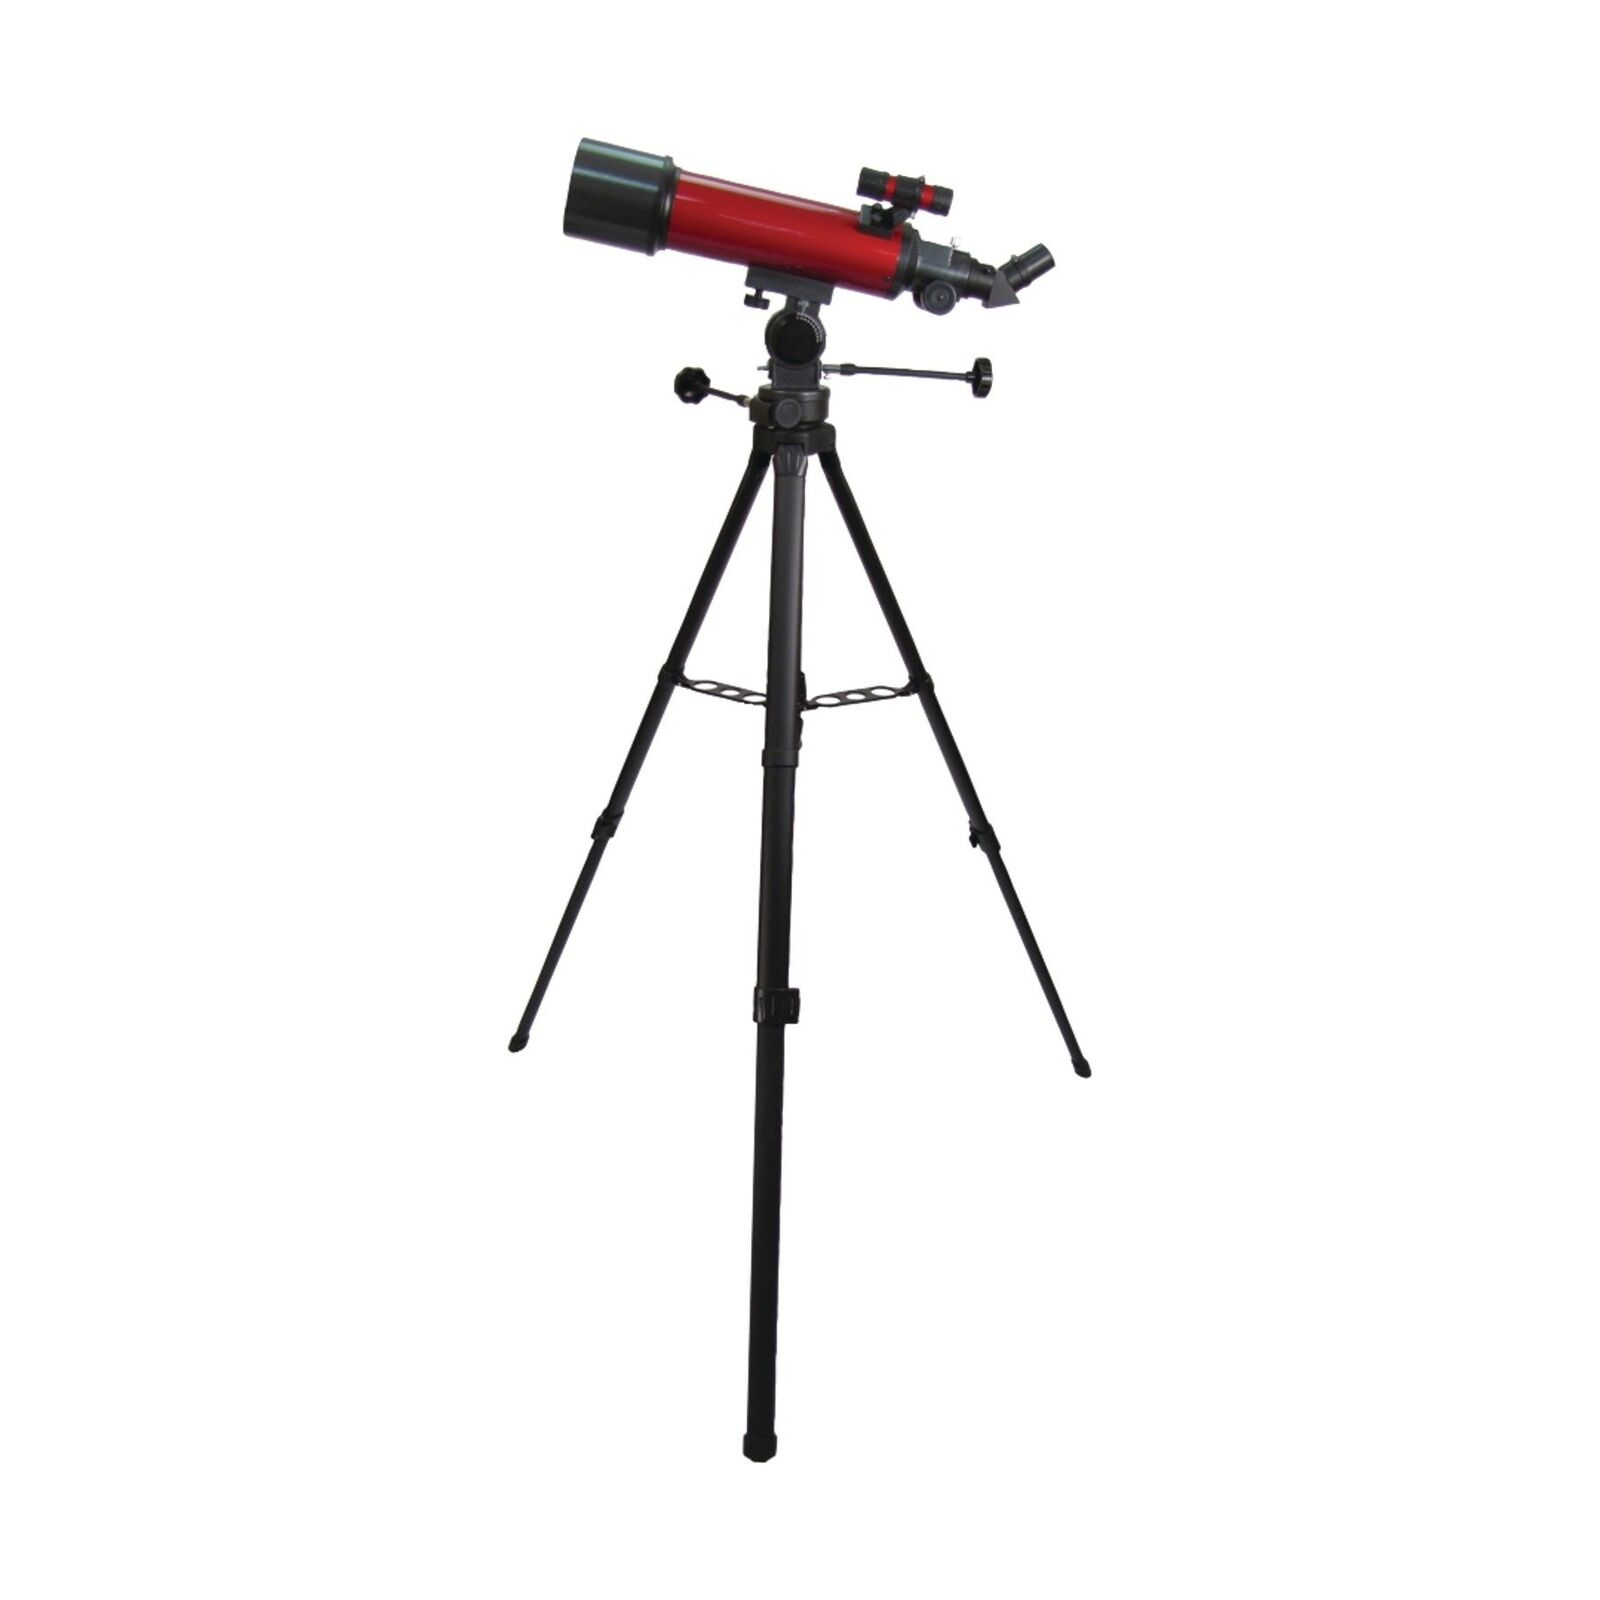 Carson Refractor Telescope 25 56x80 mm Manual Focus Aluminum Red Black RP200 New